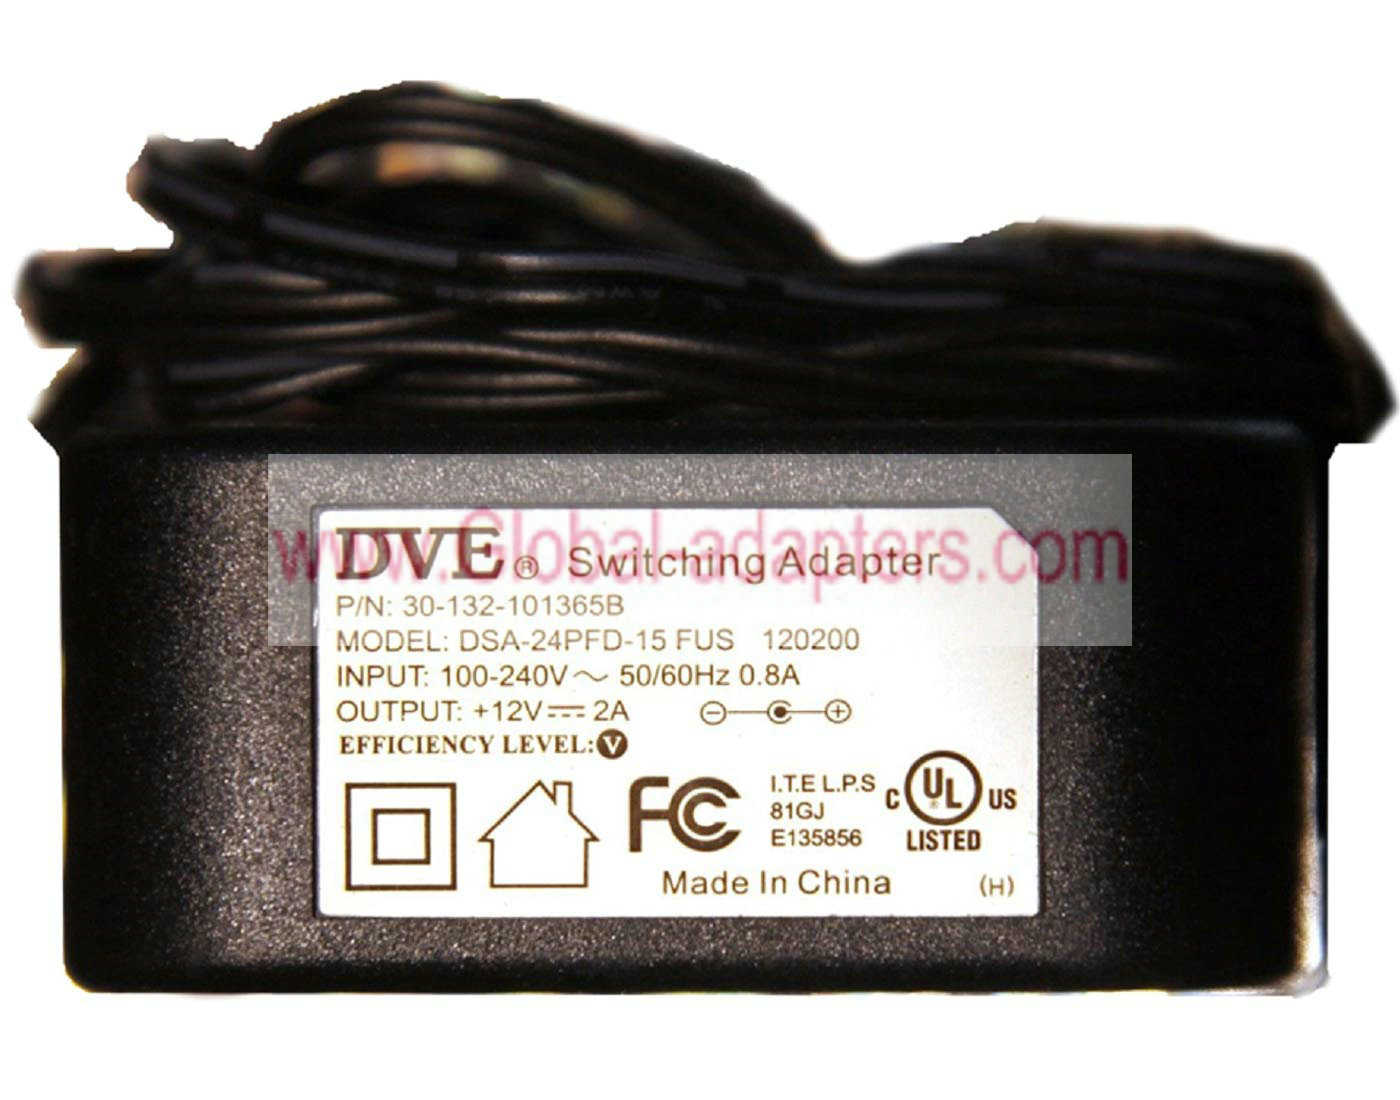 Brand New DVE 12V 2A DSA-24PFD-15 FUS 120200 AC adapter 30-132-101365B power supply 5.5*2.1mm